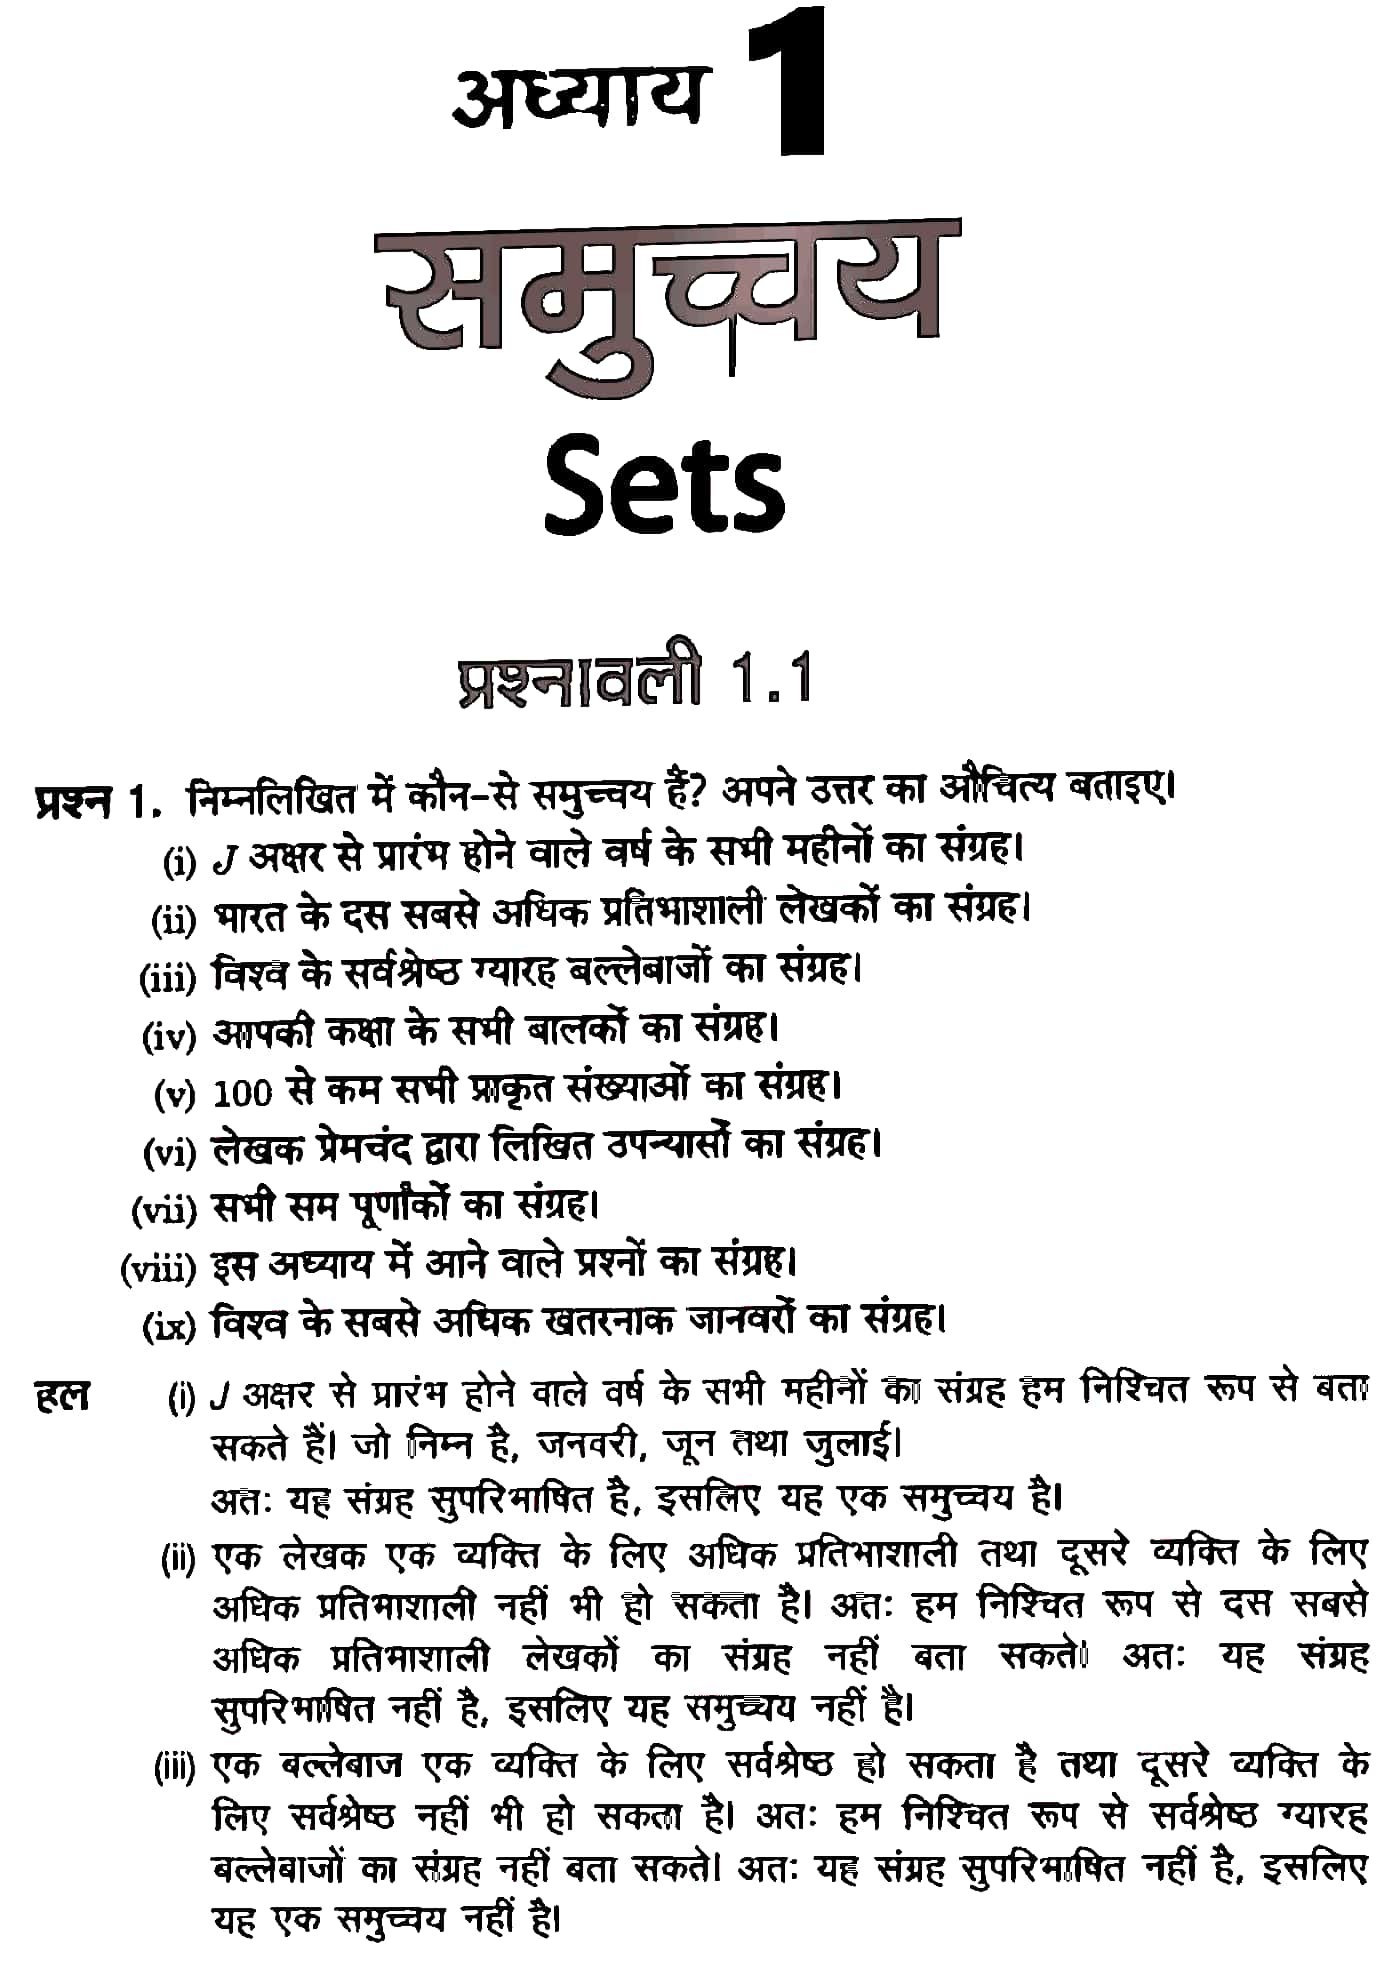 Mp board class 4 maths book pdf in hindi